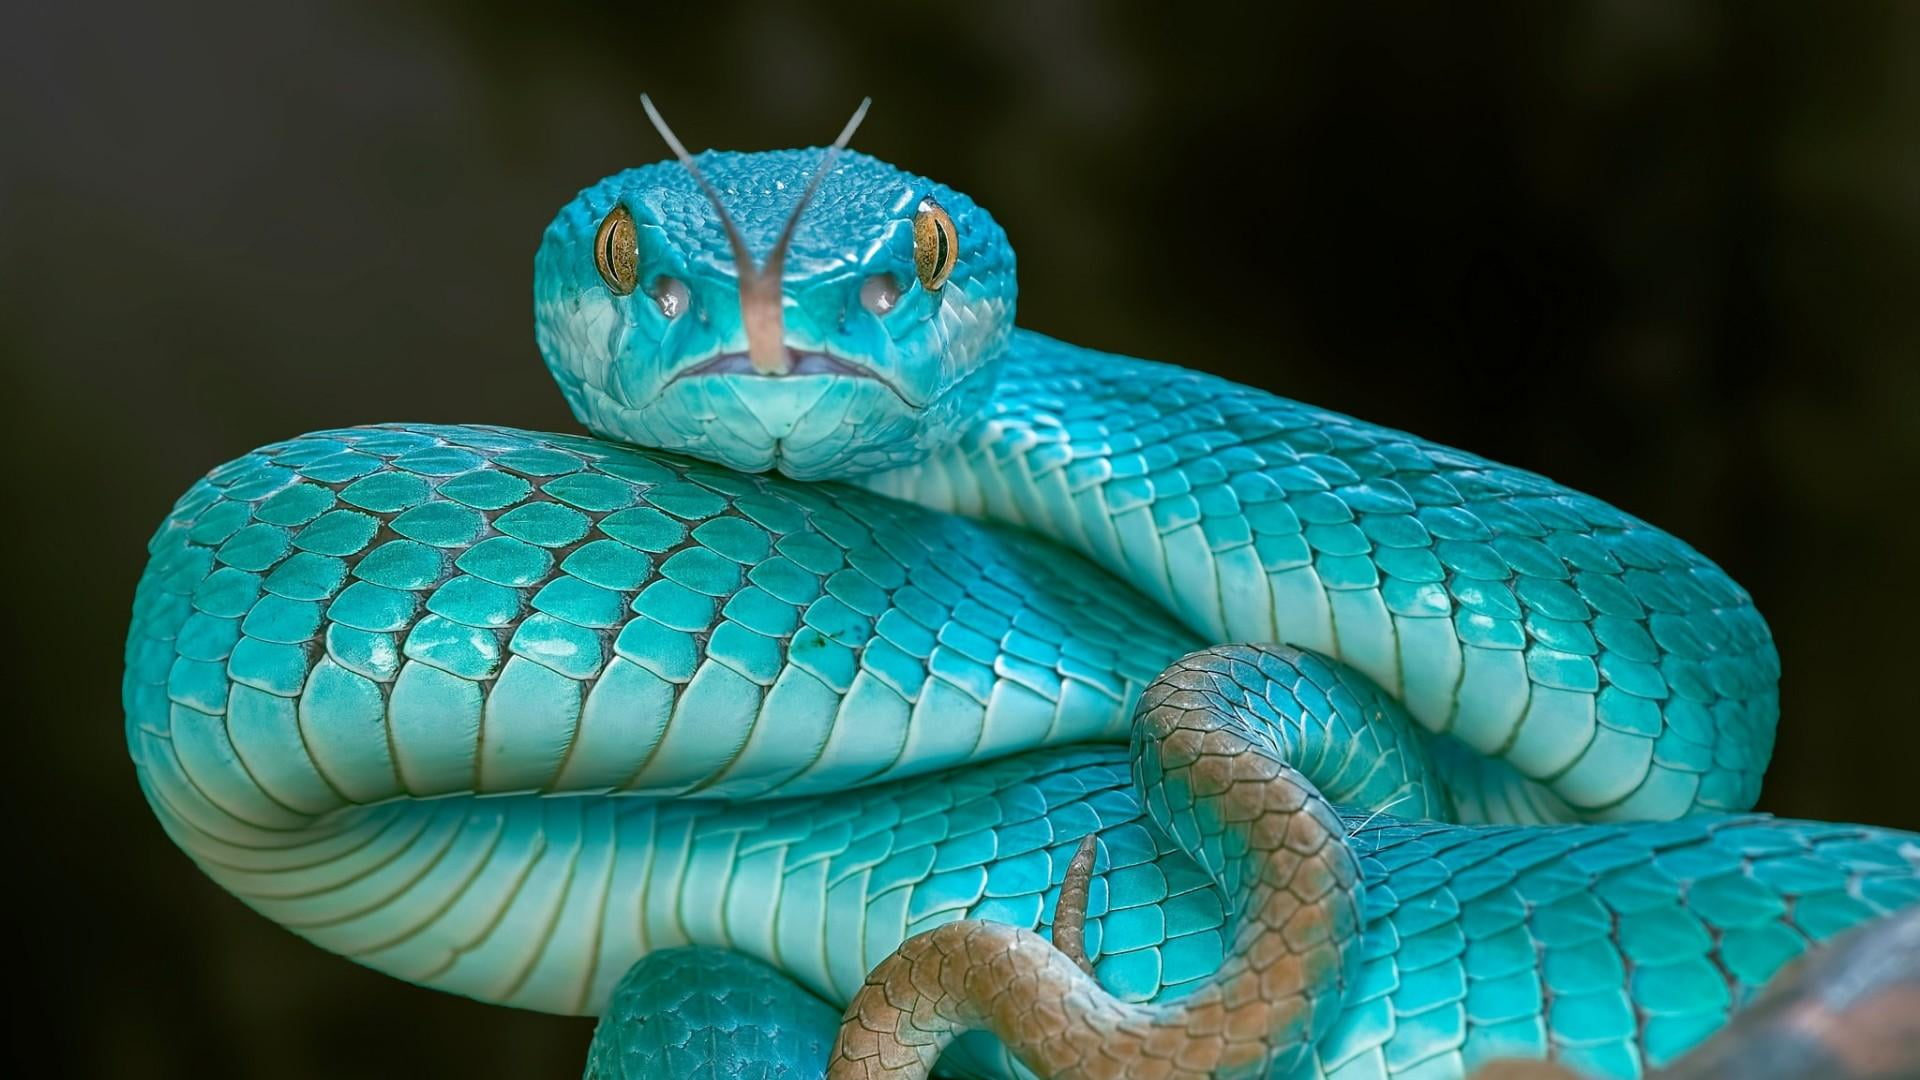 viper, serpent, reptile, snake, pit viper, blue pit viper, turquoise